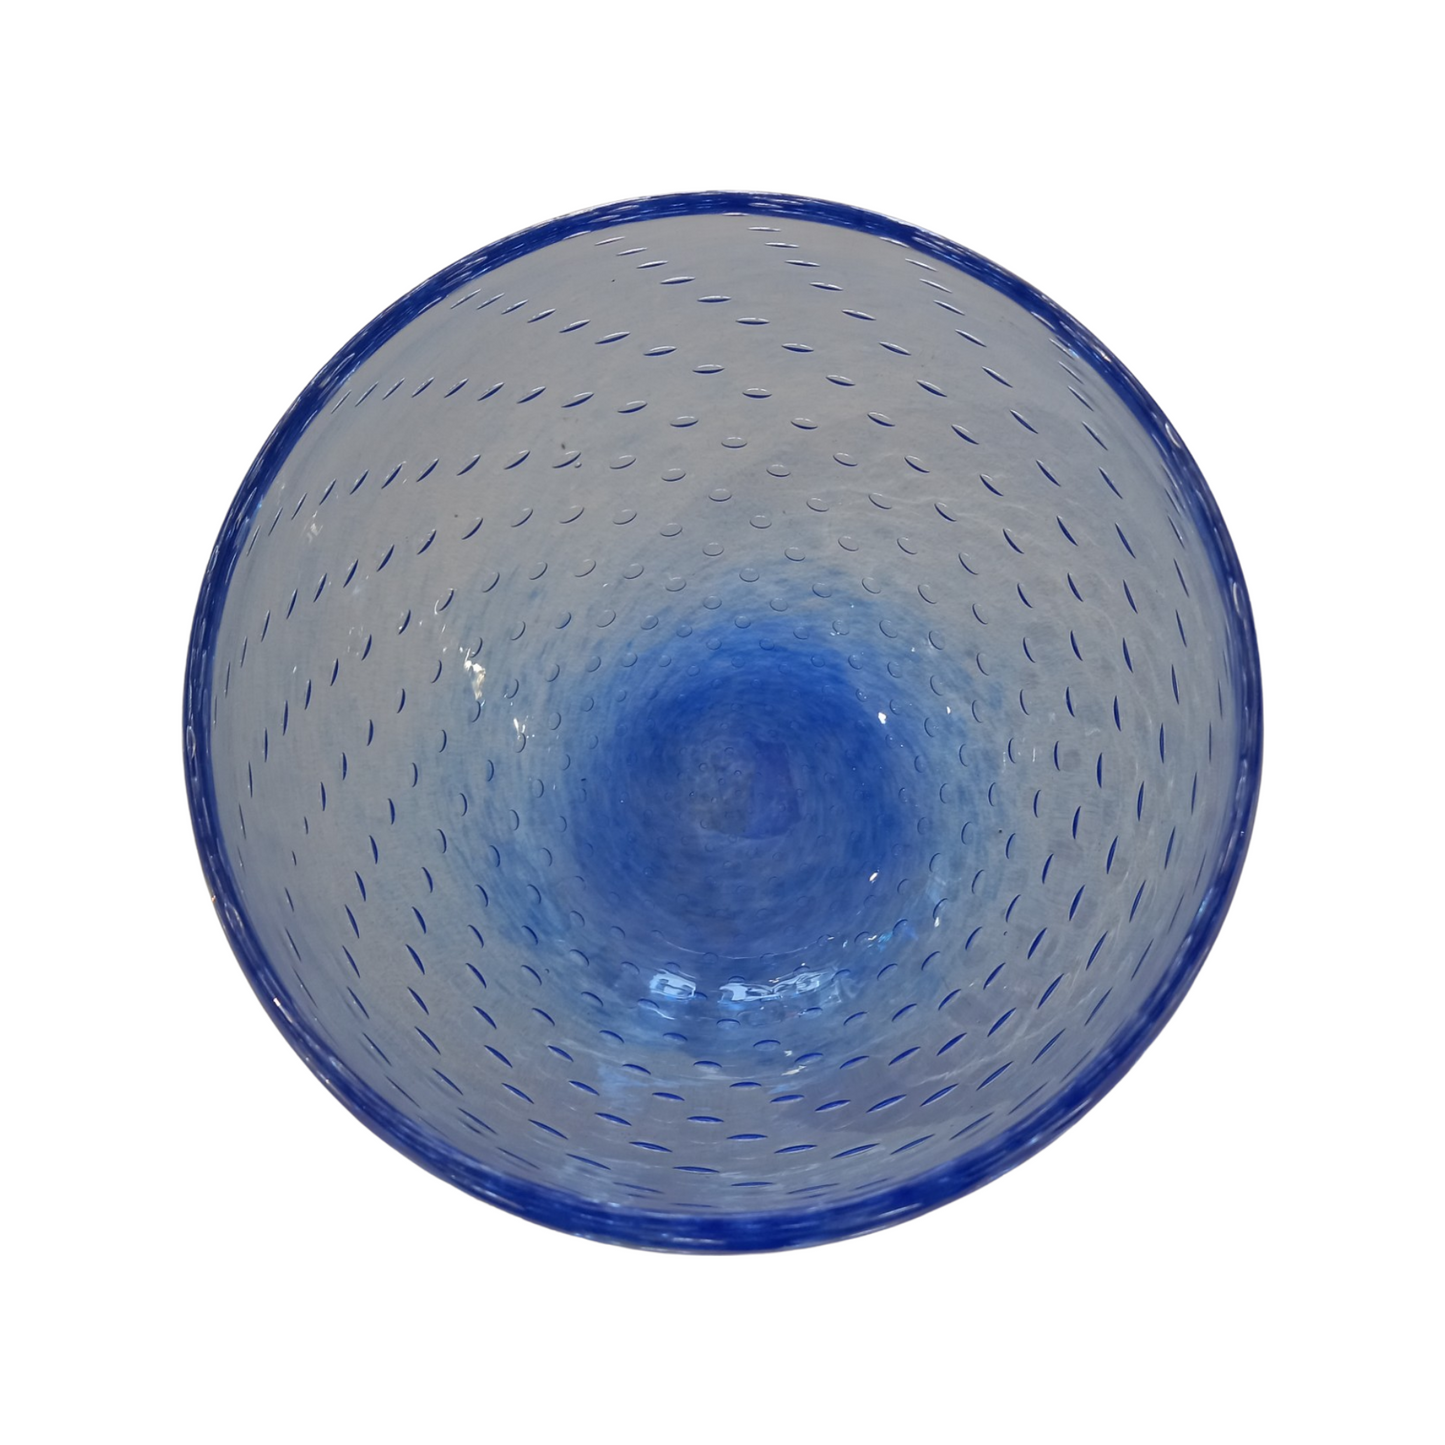 Bubble Bowl in periwinkle blue